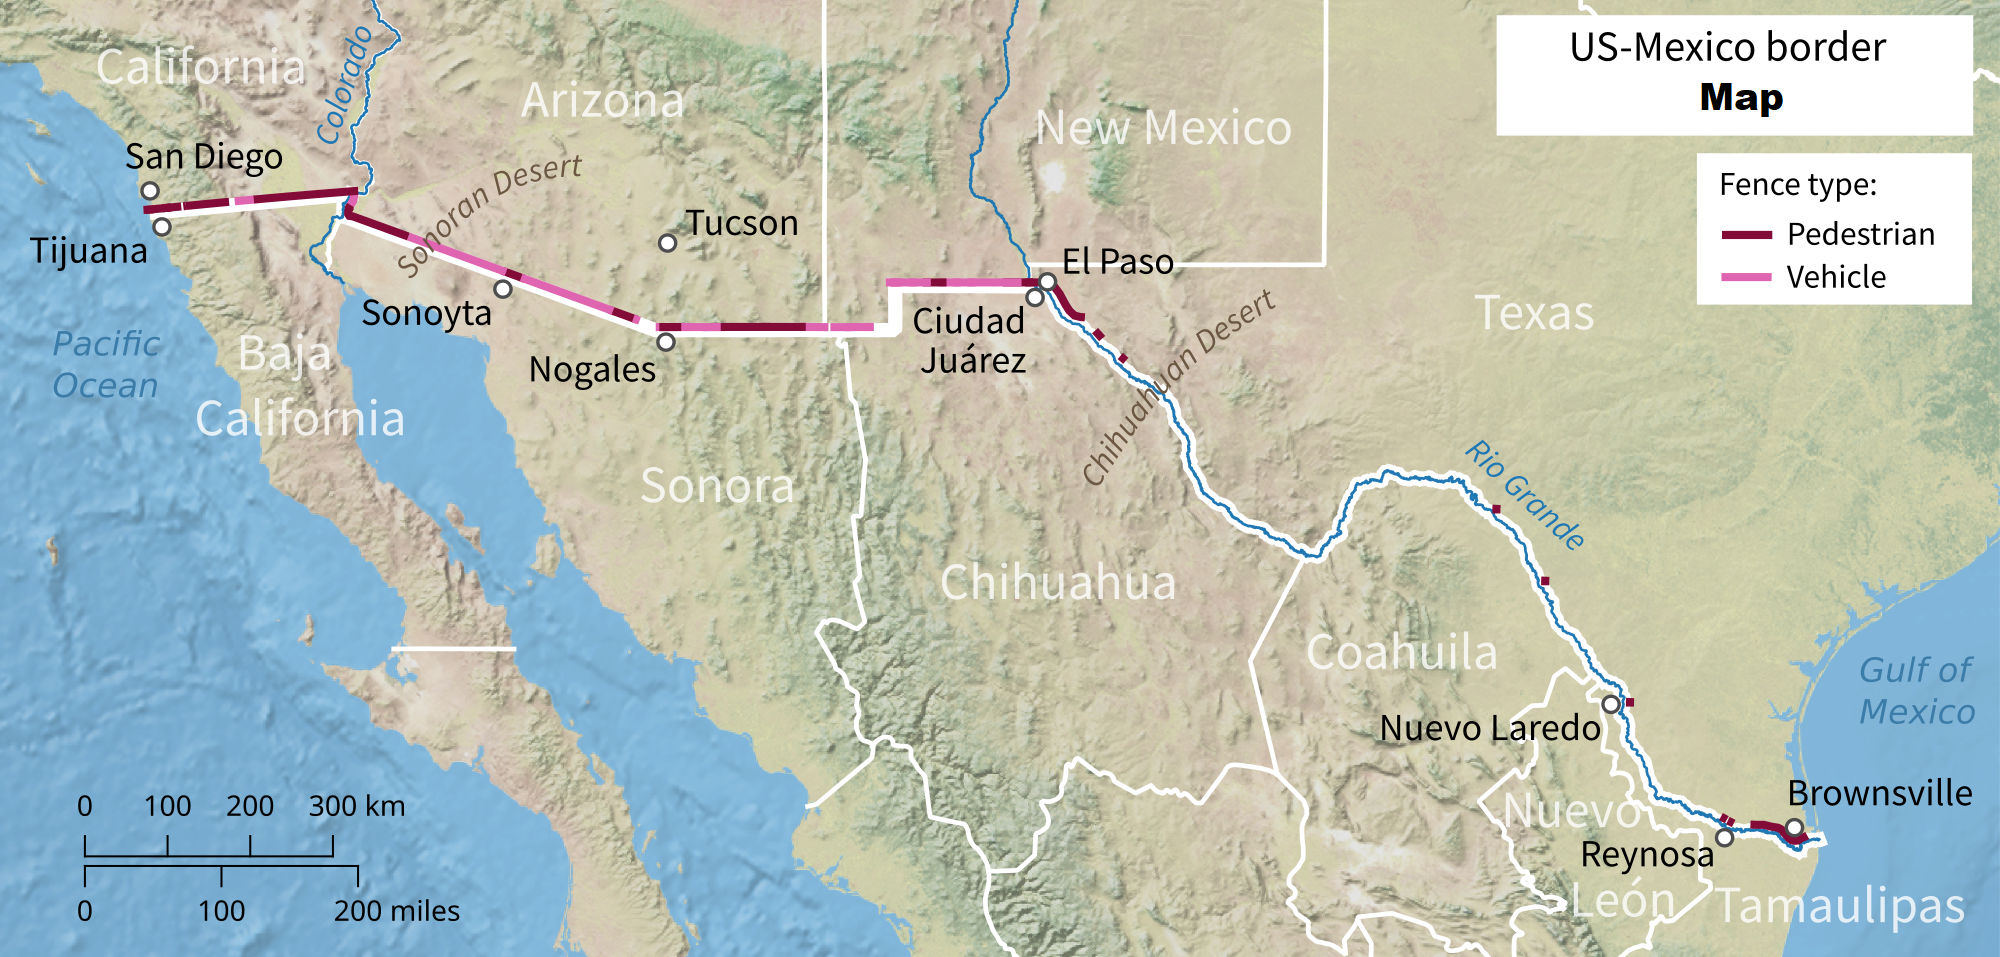 U.S Mexico Border Map